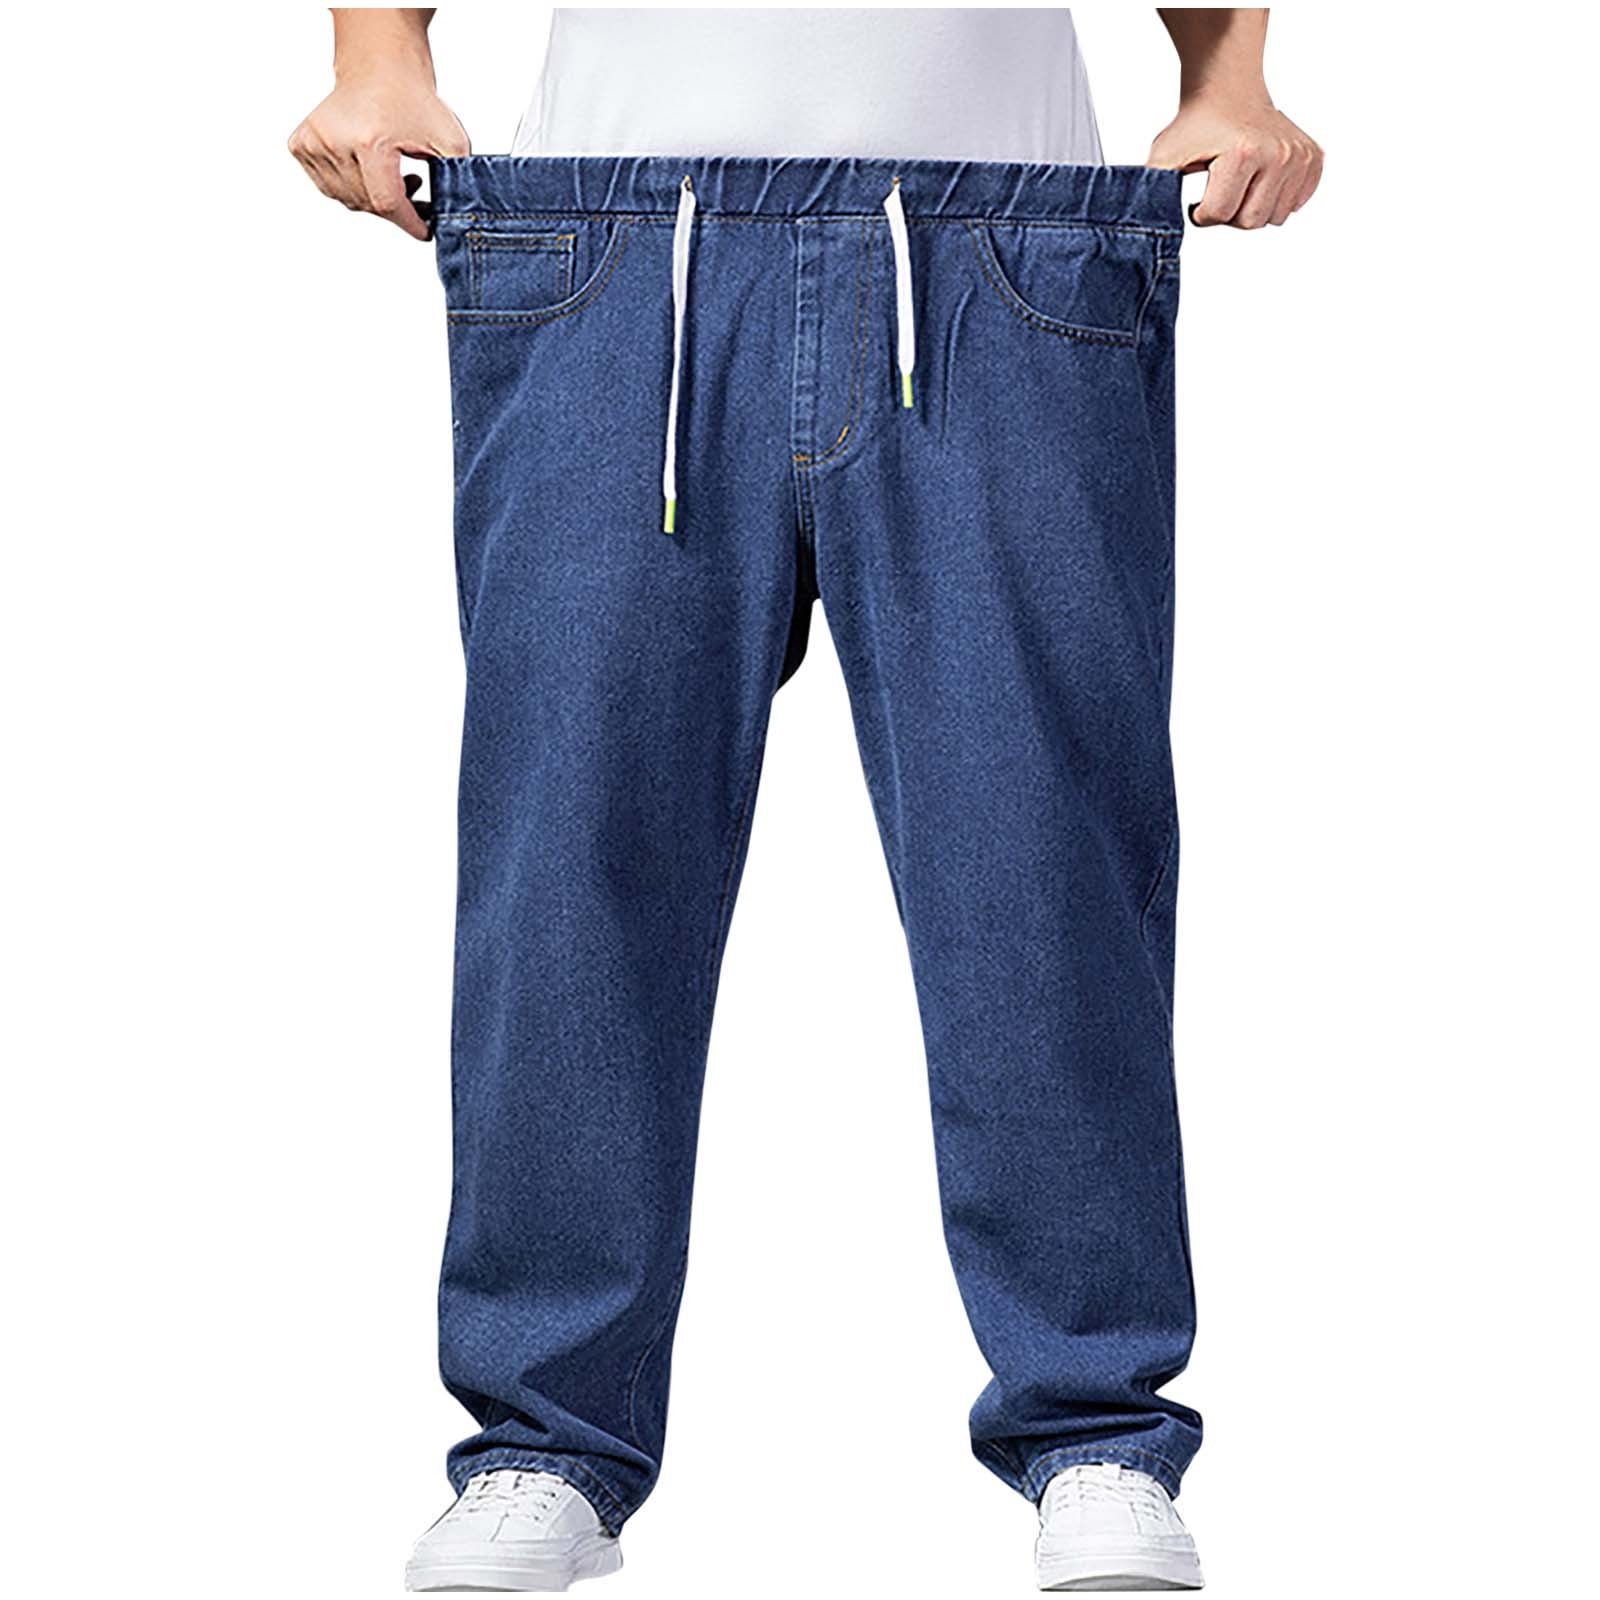 Herrnalise Men's Joggers Denim Jeans Elastic Waist Casual Pull On Pants ...